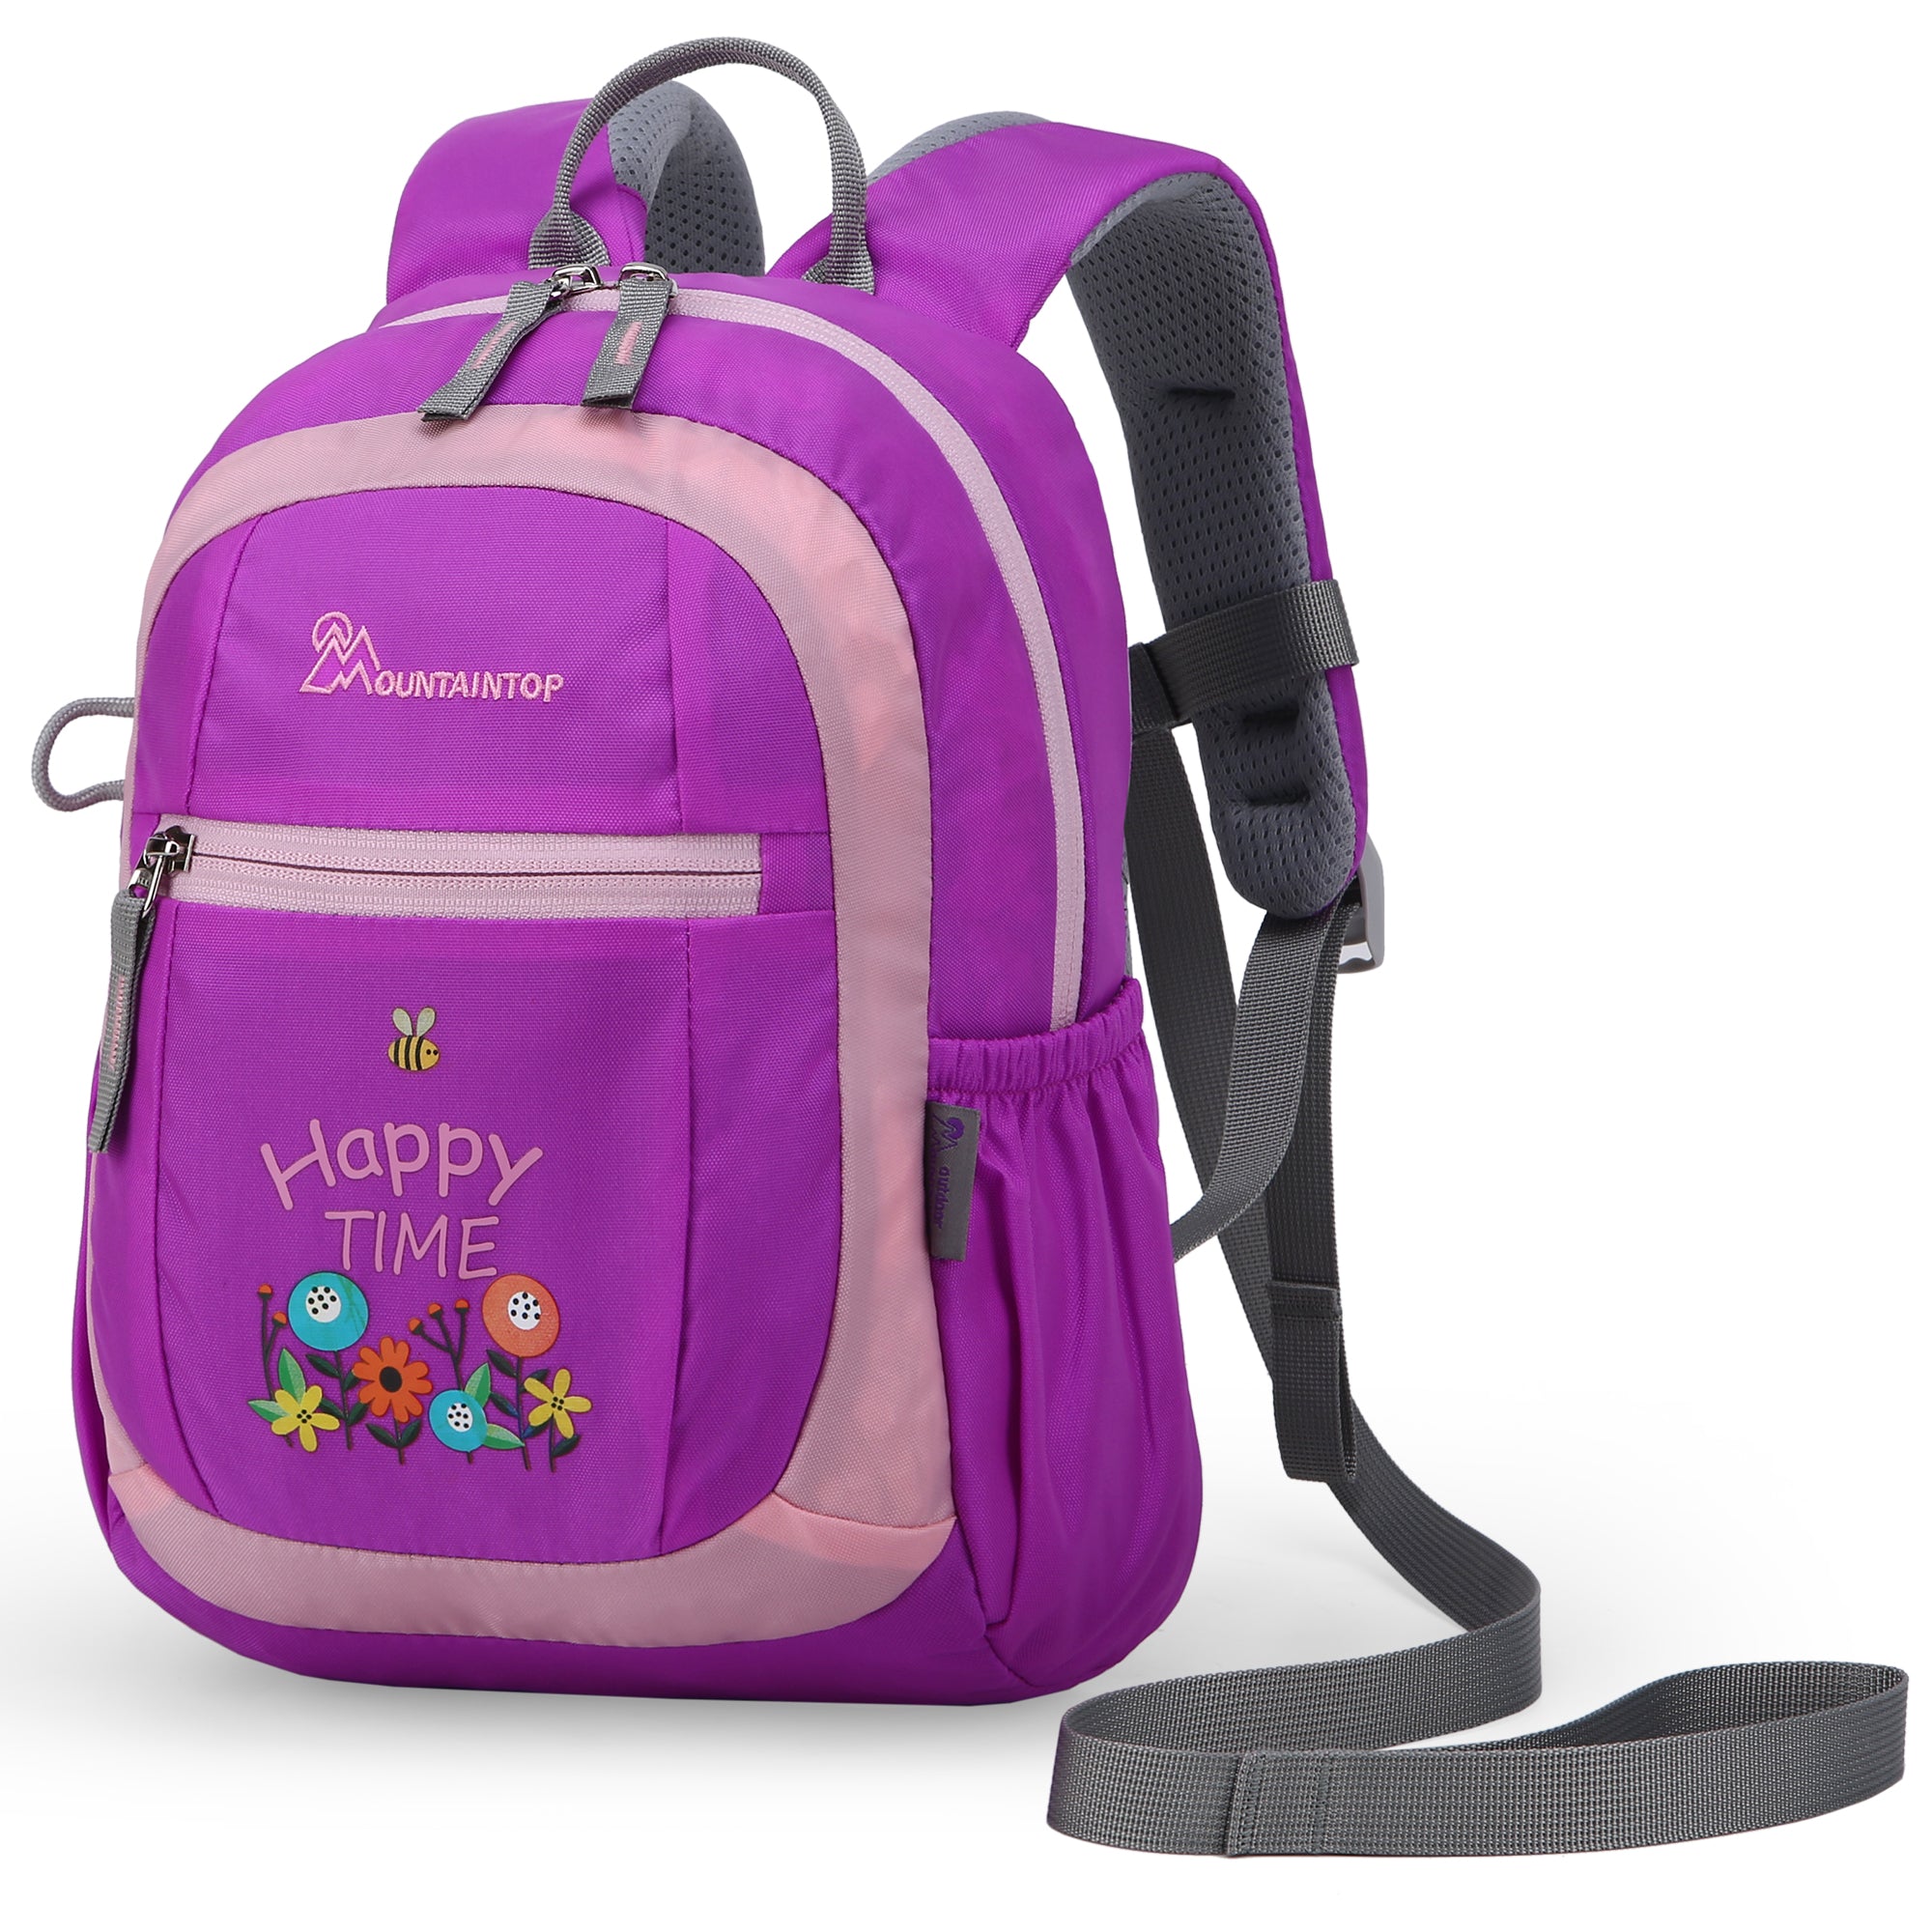 Preschool Kindergarten Bag,Removable Anti-lost Safety Rope Backpack